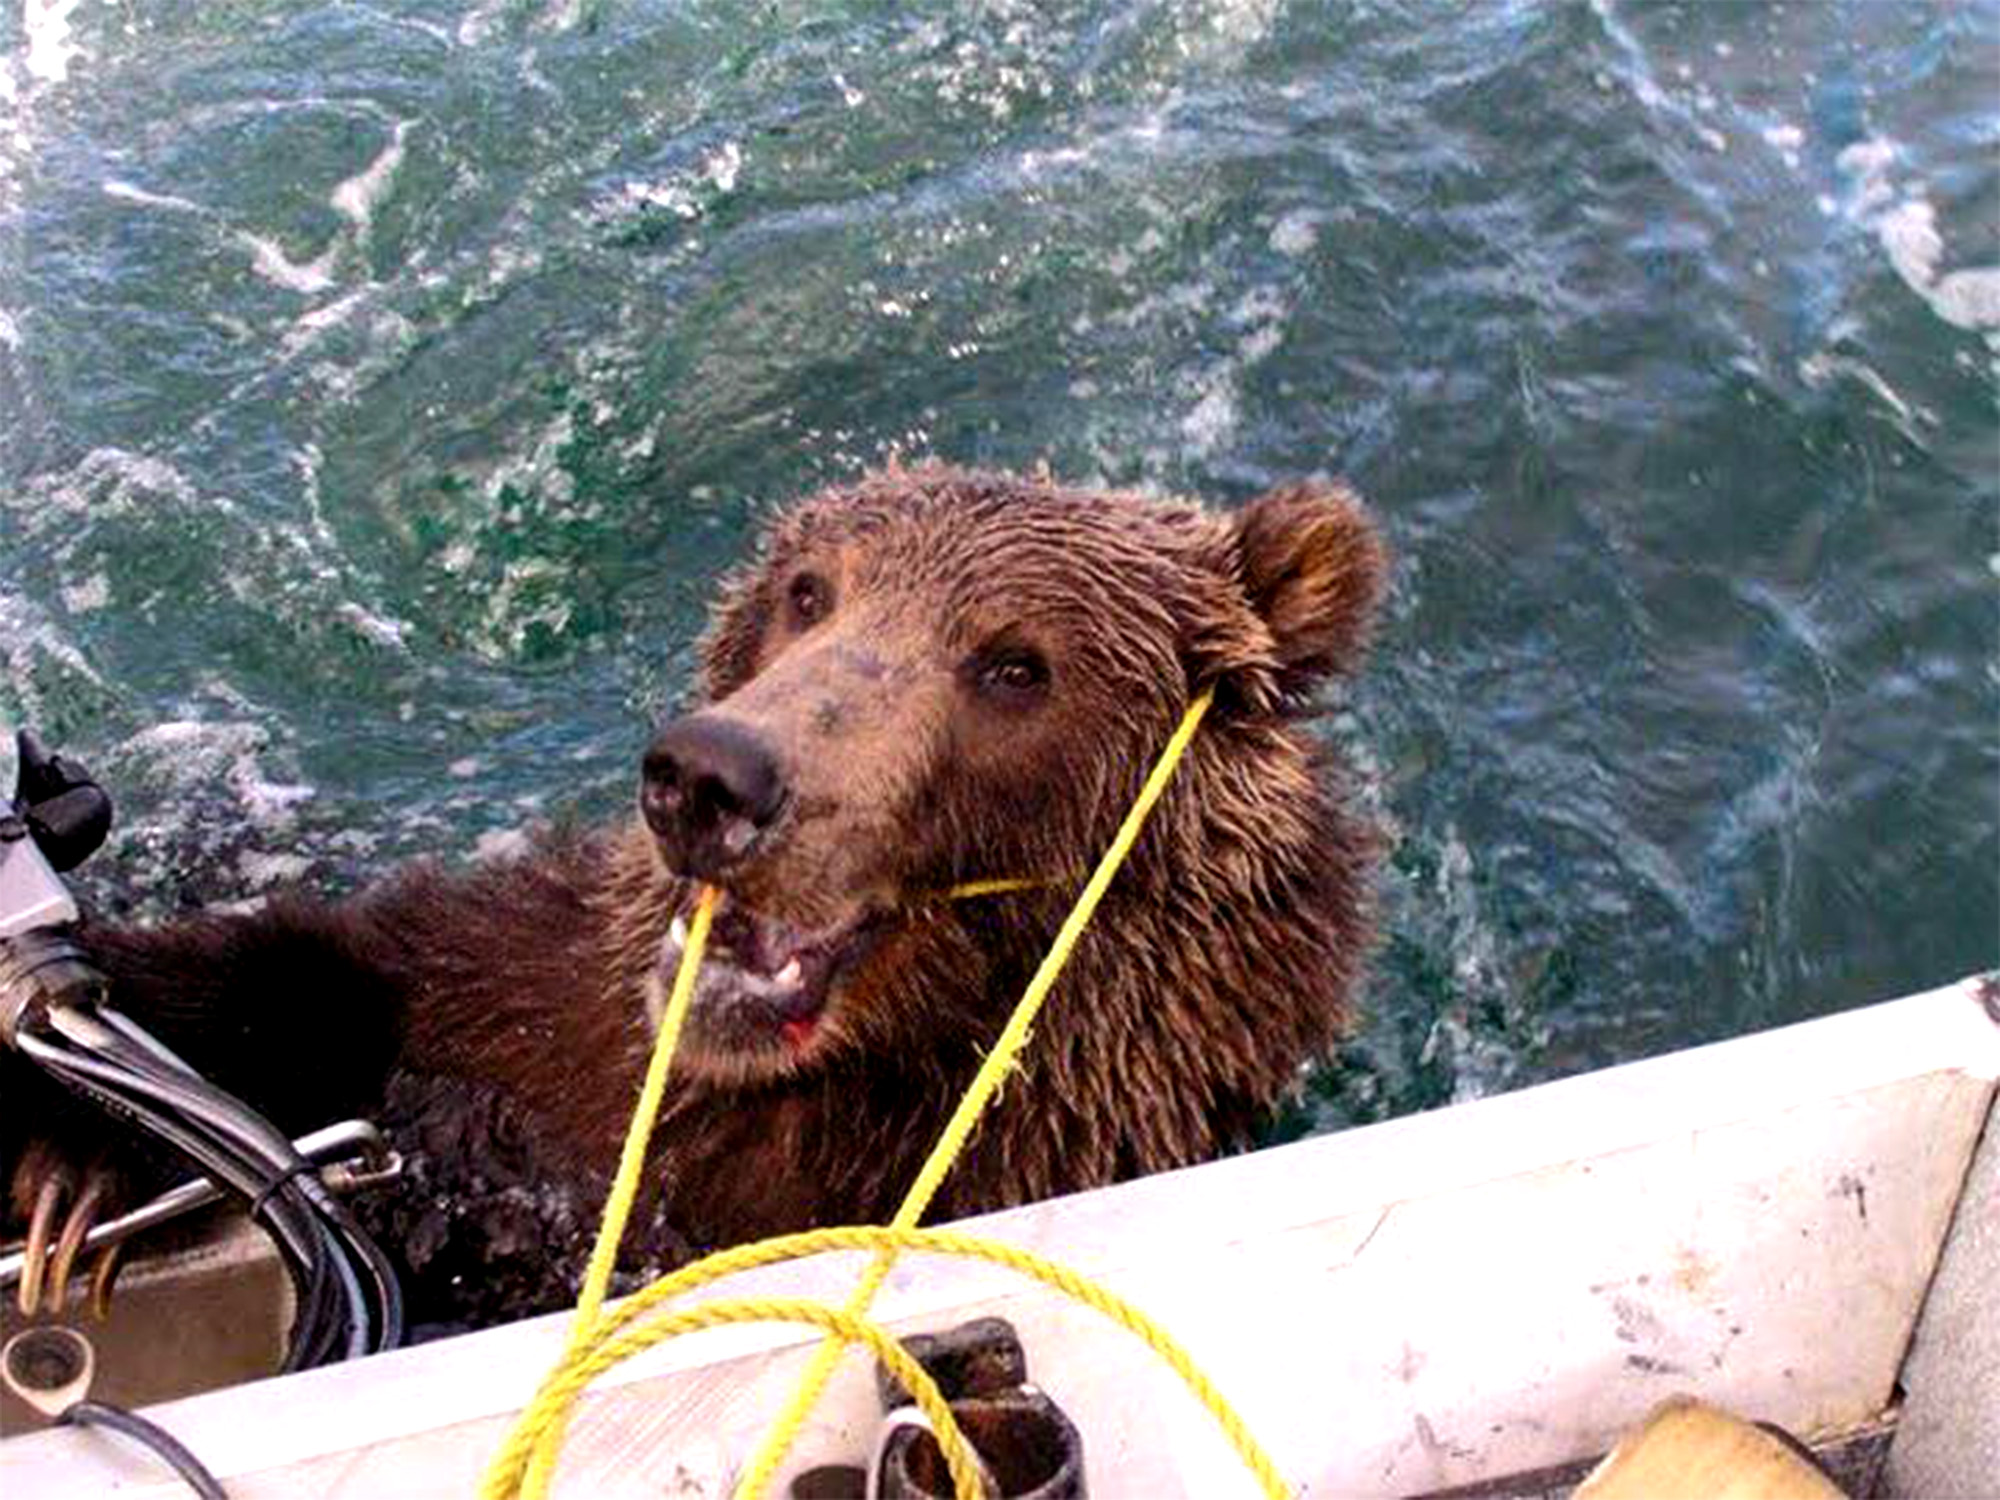 An Alaska Man Lassoed a Drowning Brown Bear, and the Photos Have Resurfaced